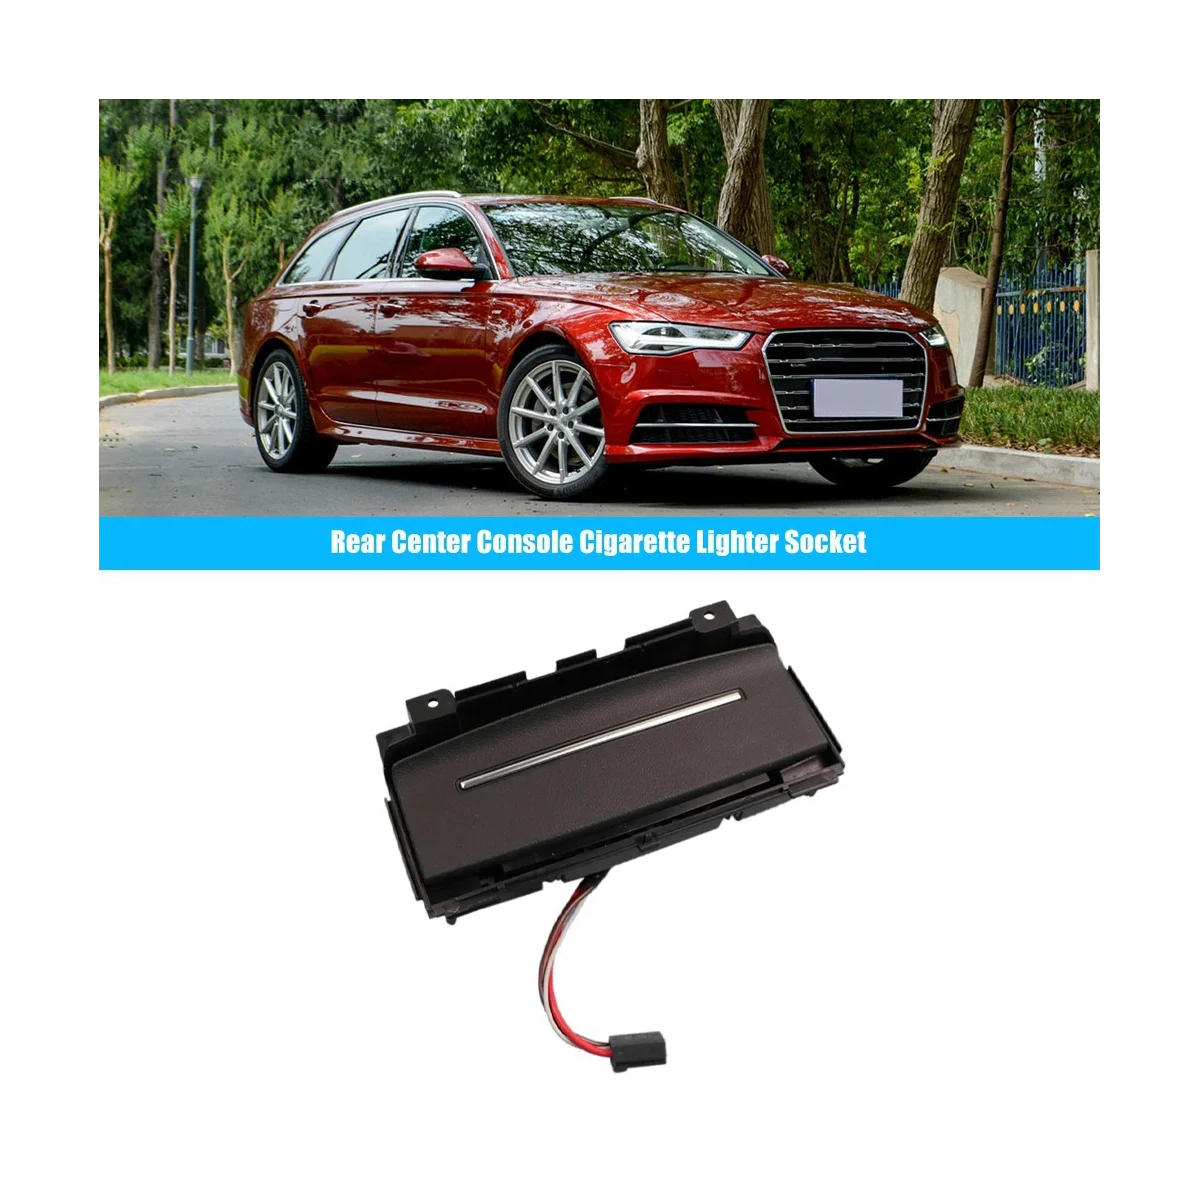 

Car Rear Center Console Cigarette Lighter Socket 12V Power Outlet Assembly for Audi A6 C7/S6/Avant Quattro A7 4G0919565